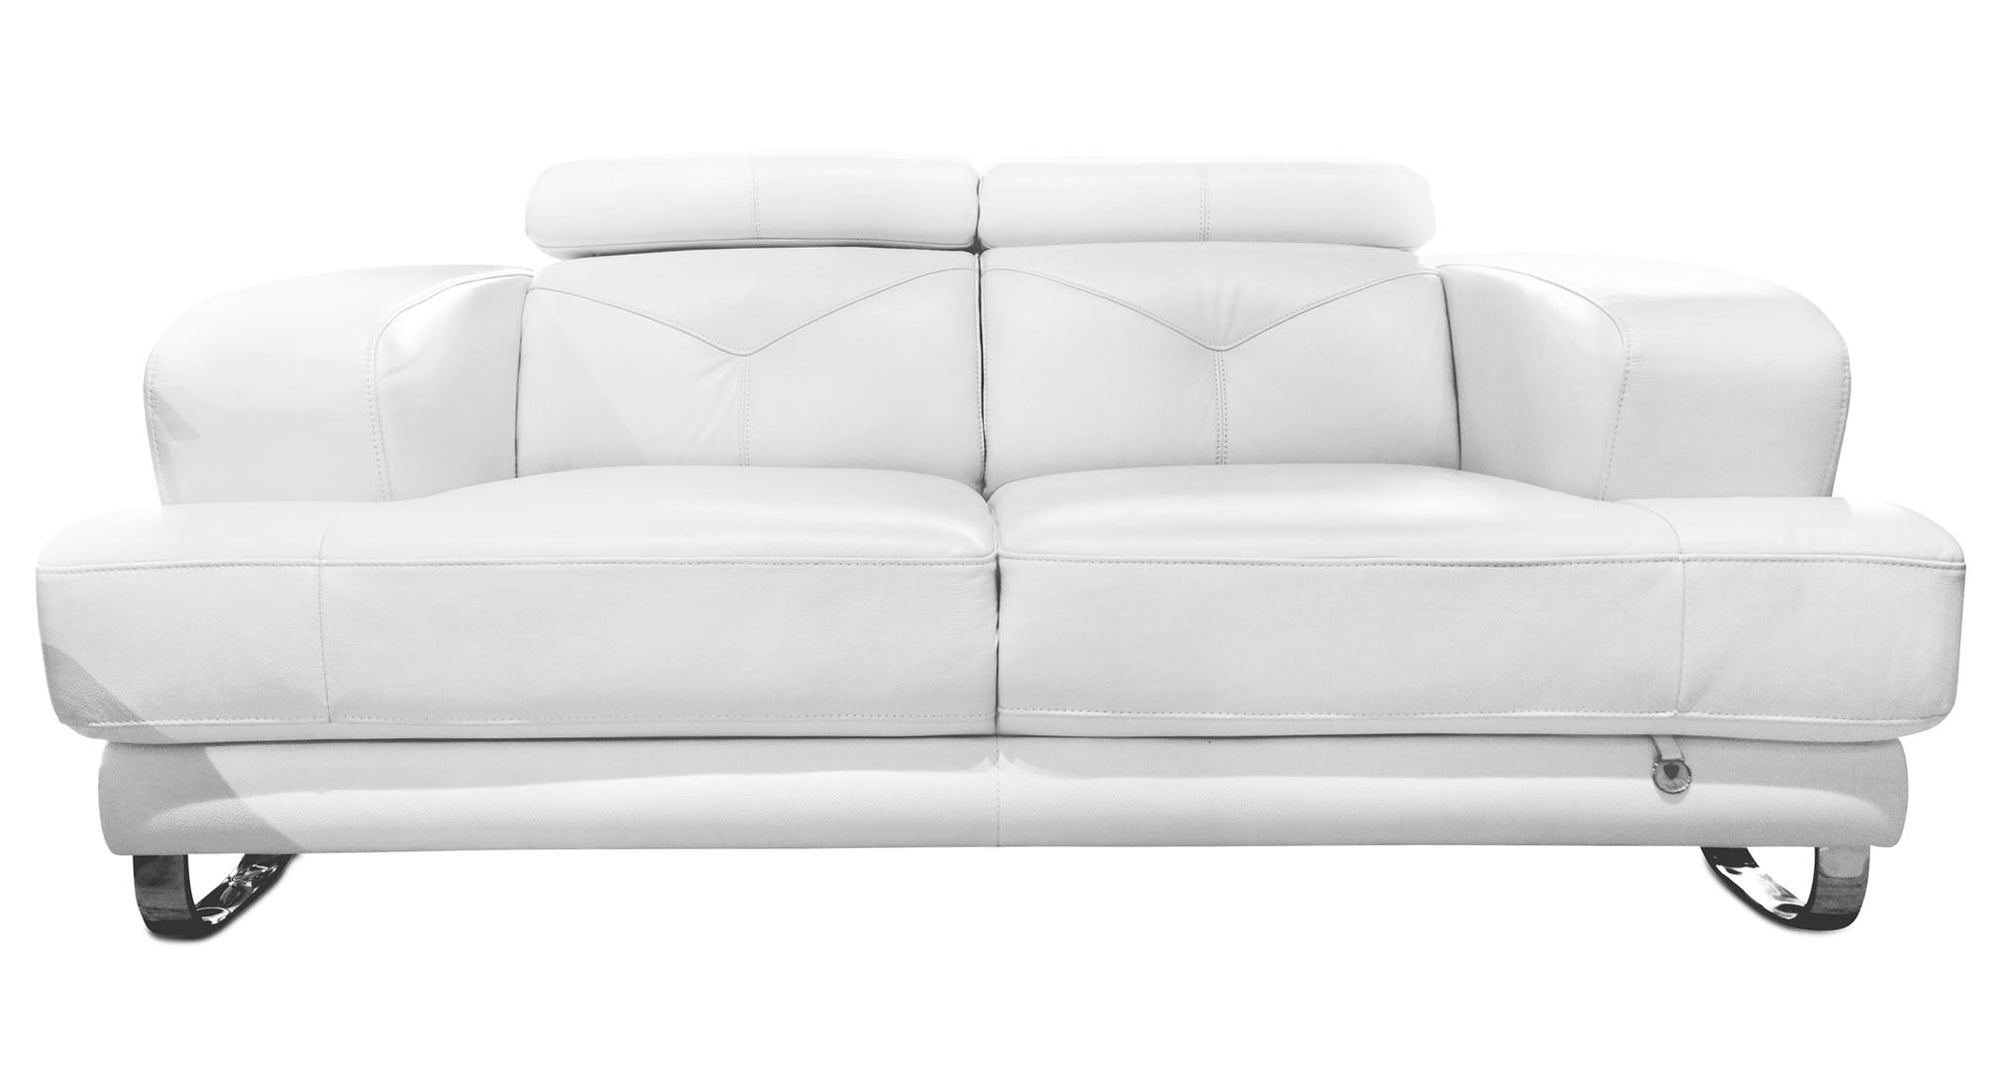 Broadway White Leather Loveseat - MJM Furniture